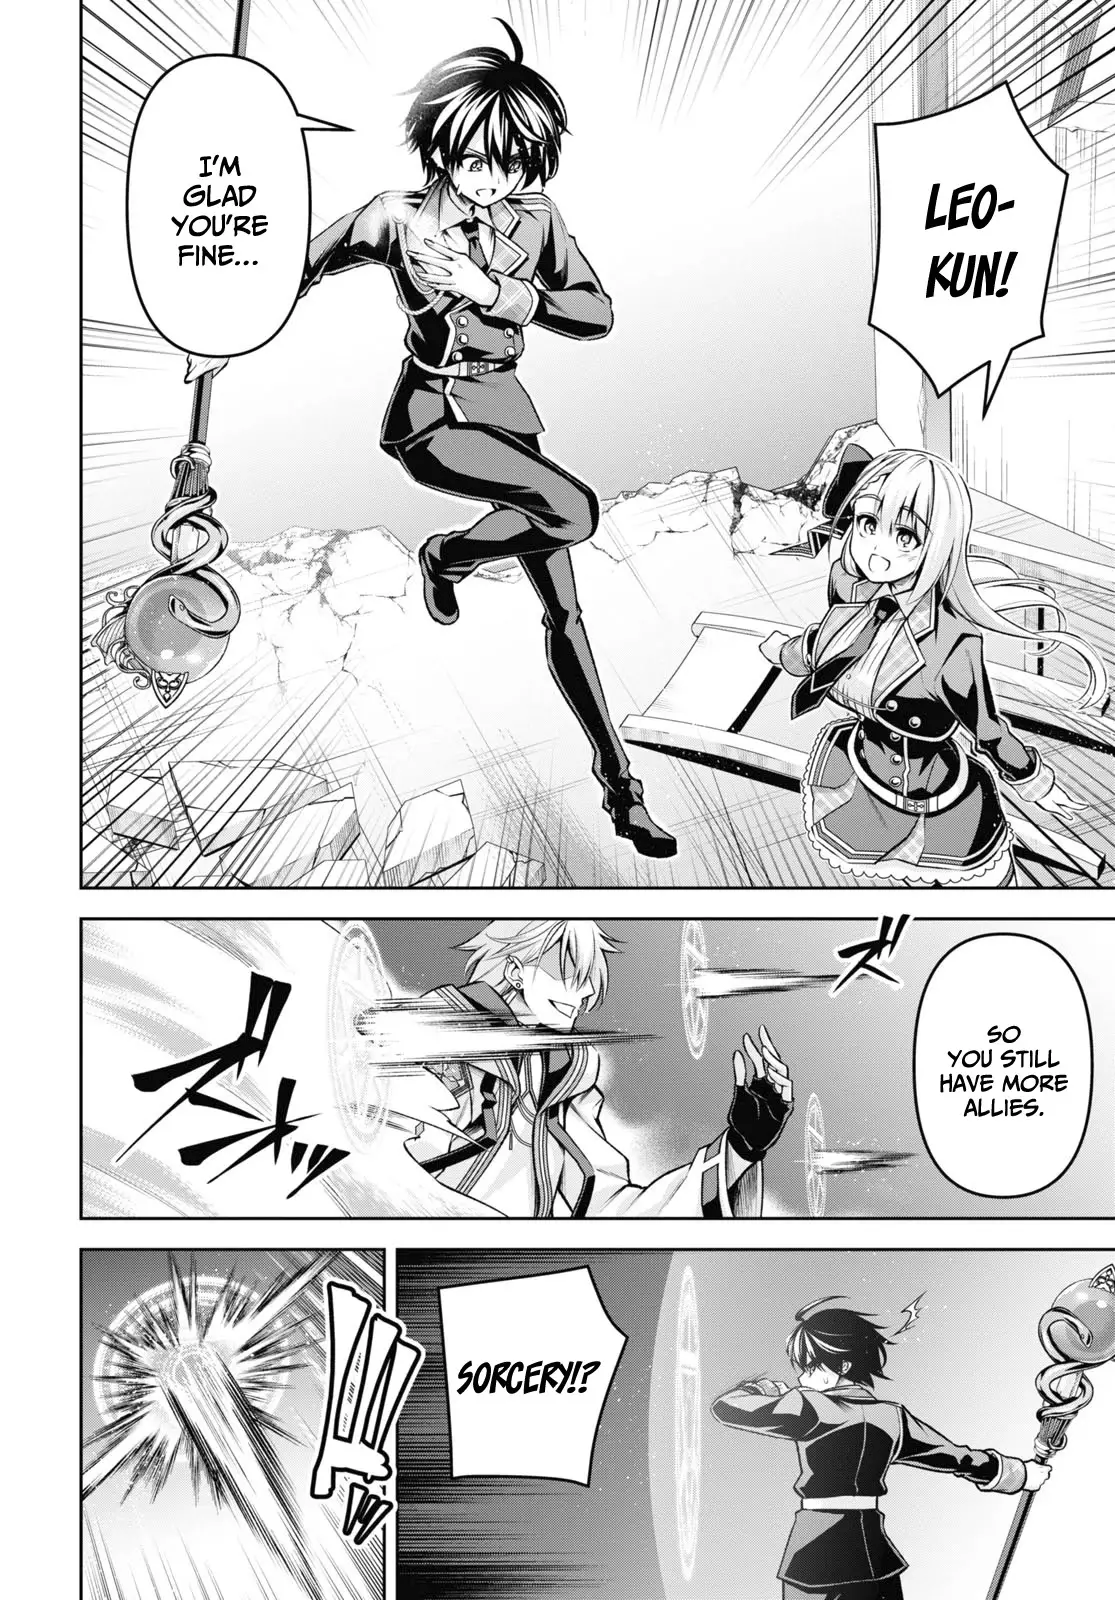 Demon's Sword Master Of Excalibur School - 28 page 5-6c37f627